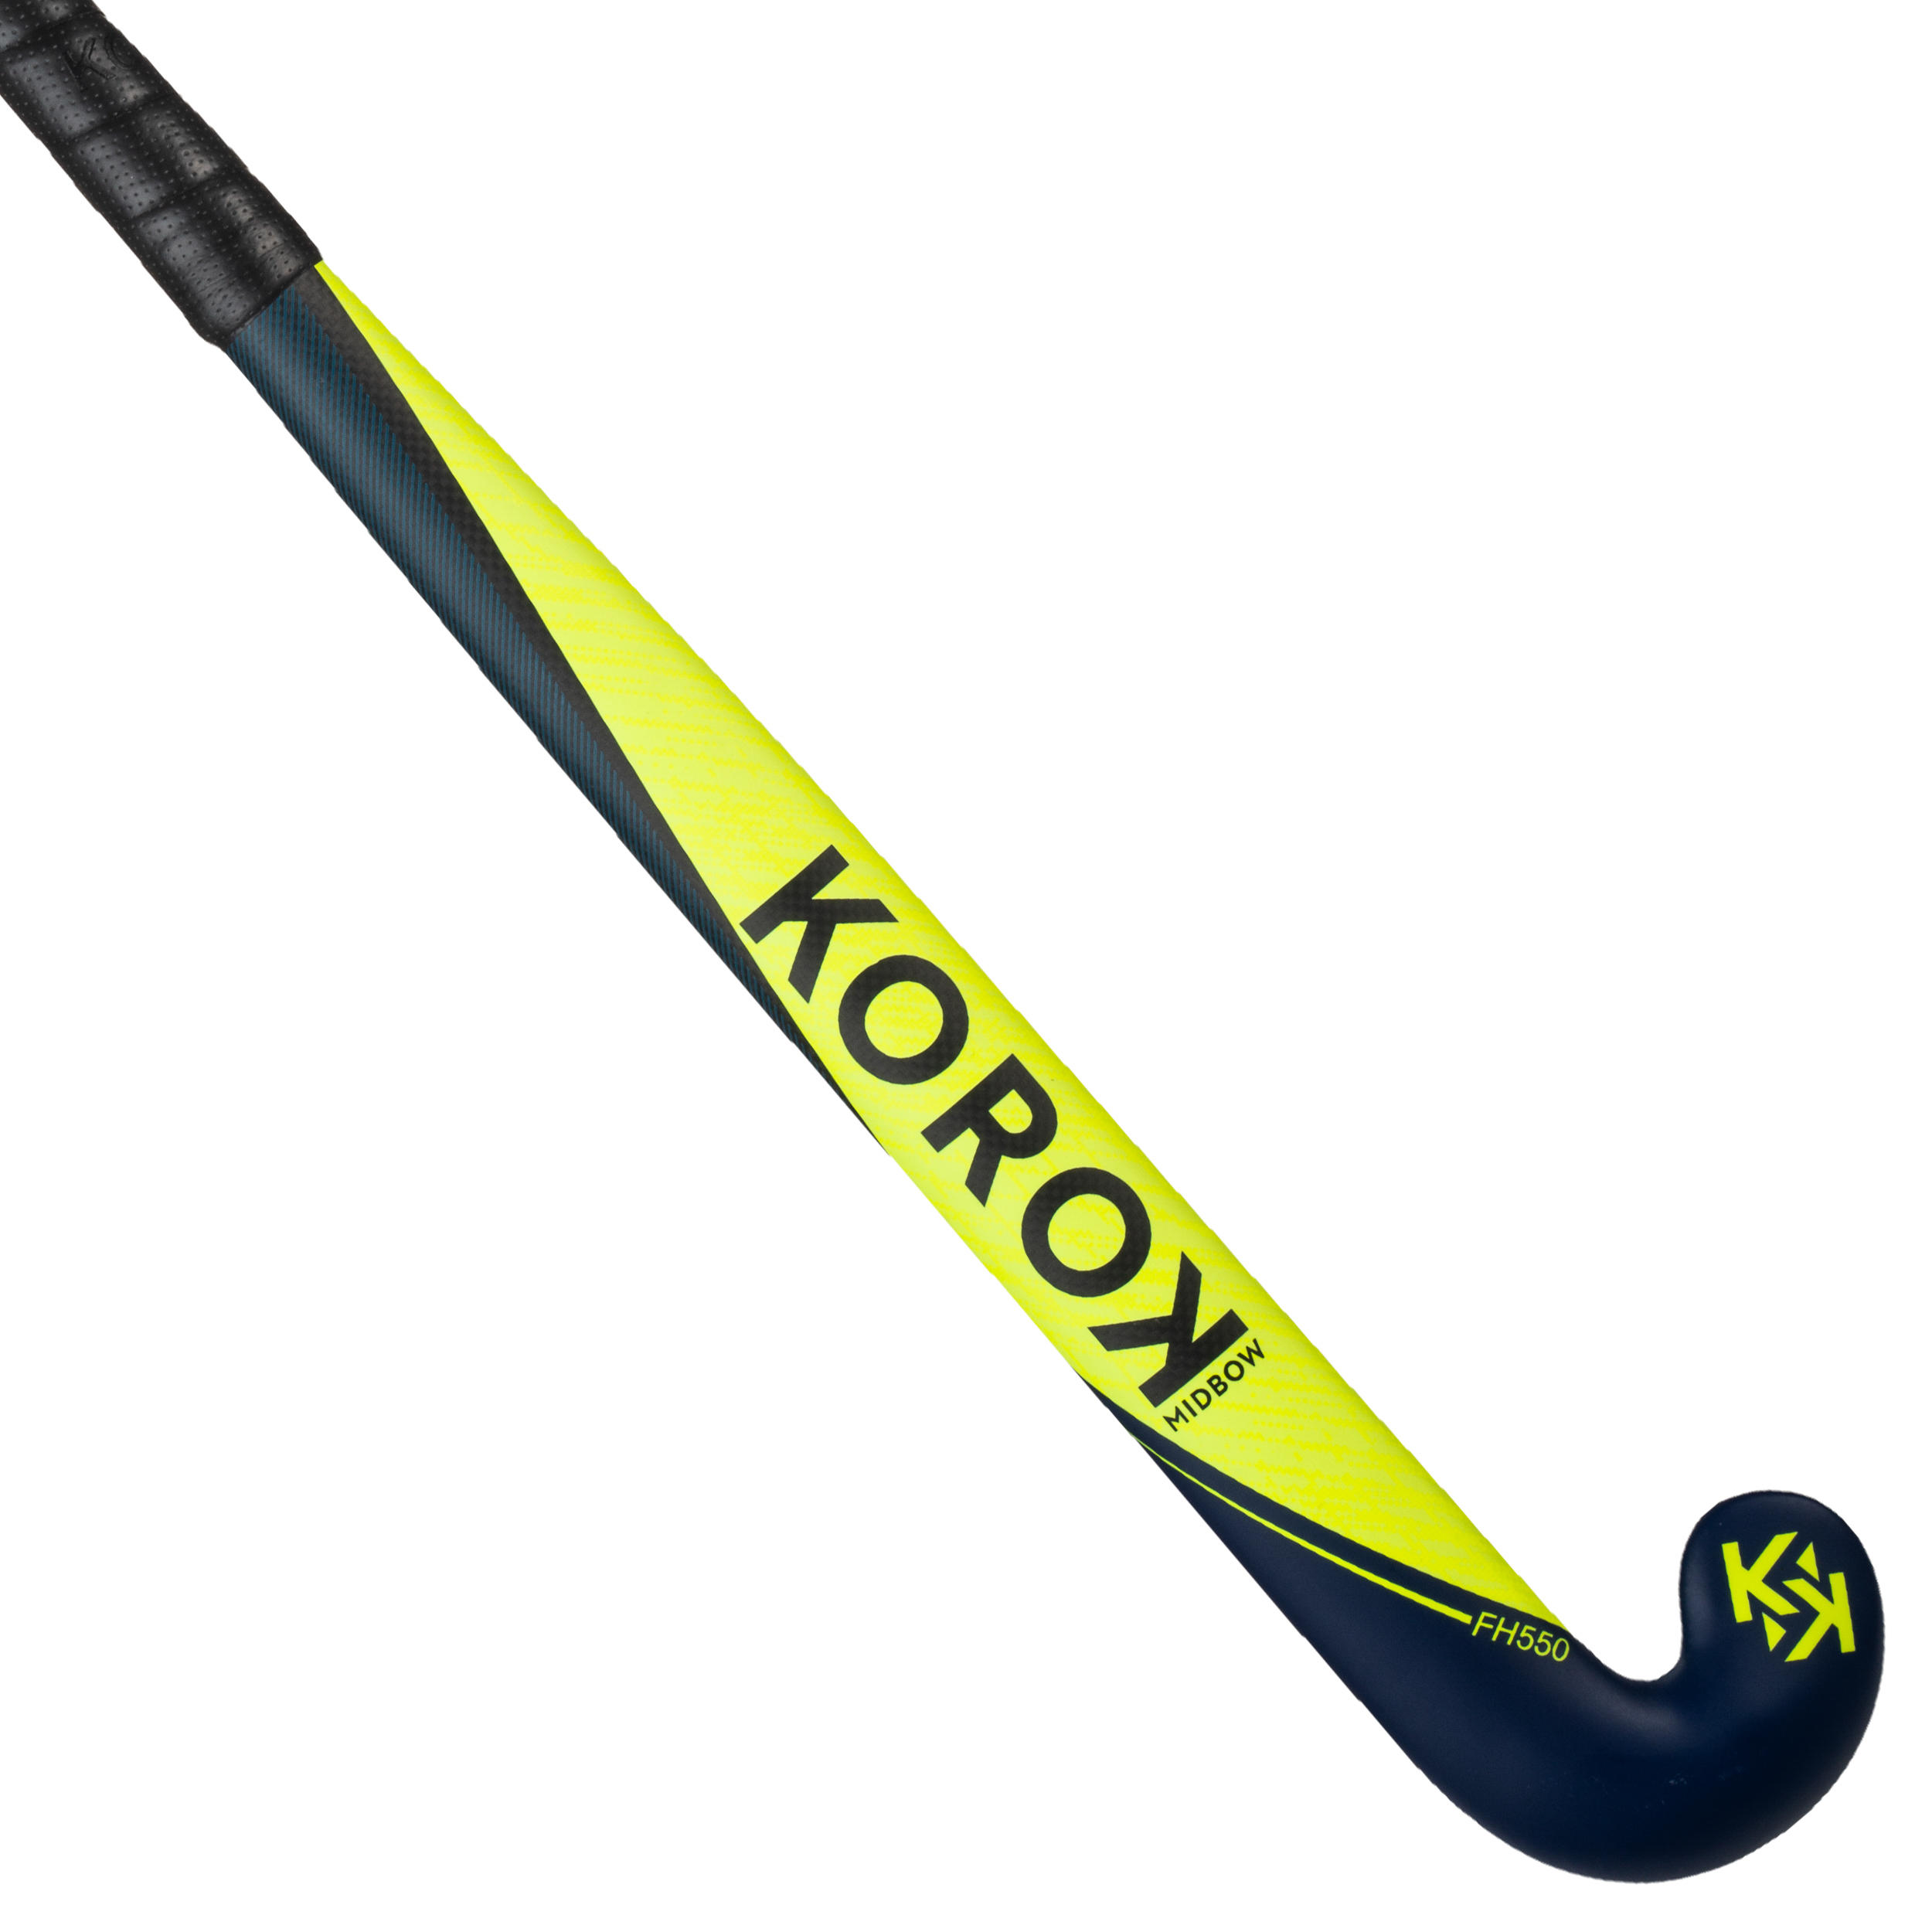 KOROK FHST500 Adult Intermediate 50% Carbon Mid Bow Field Hockey Stick - Yellow/Blue